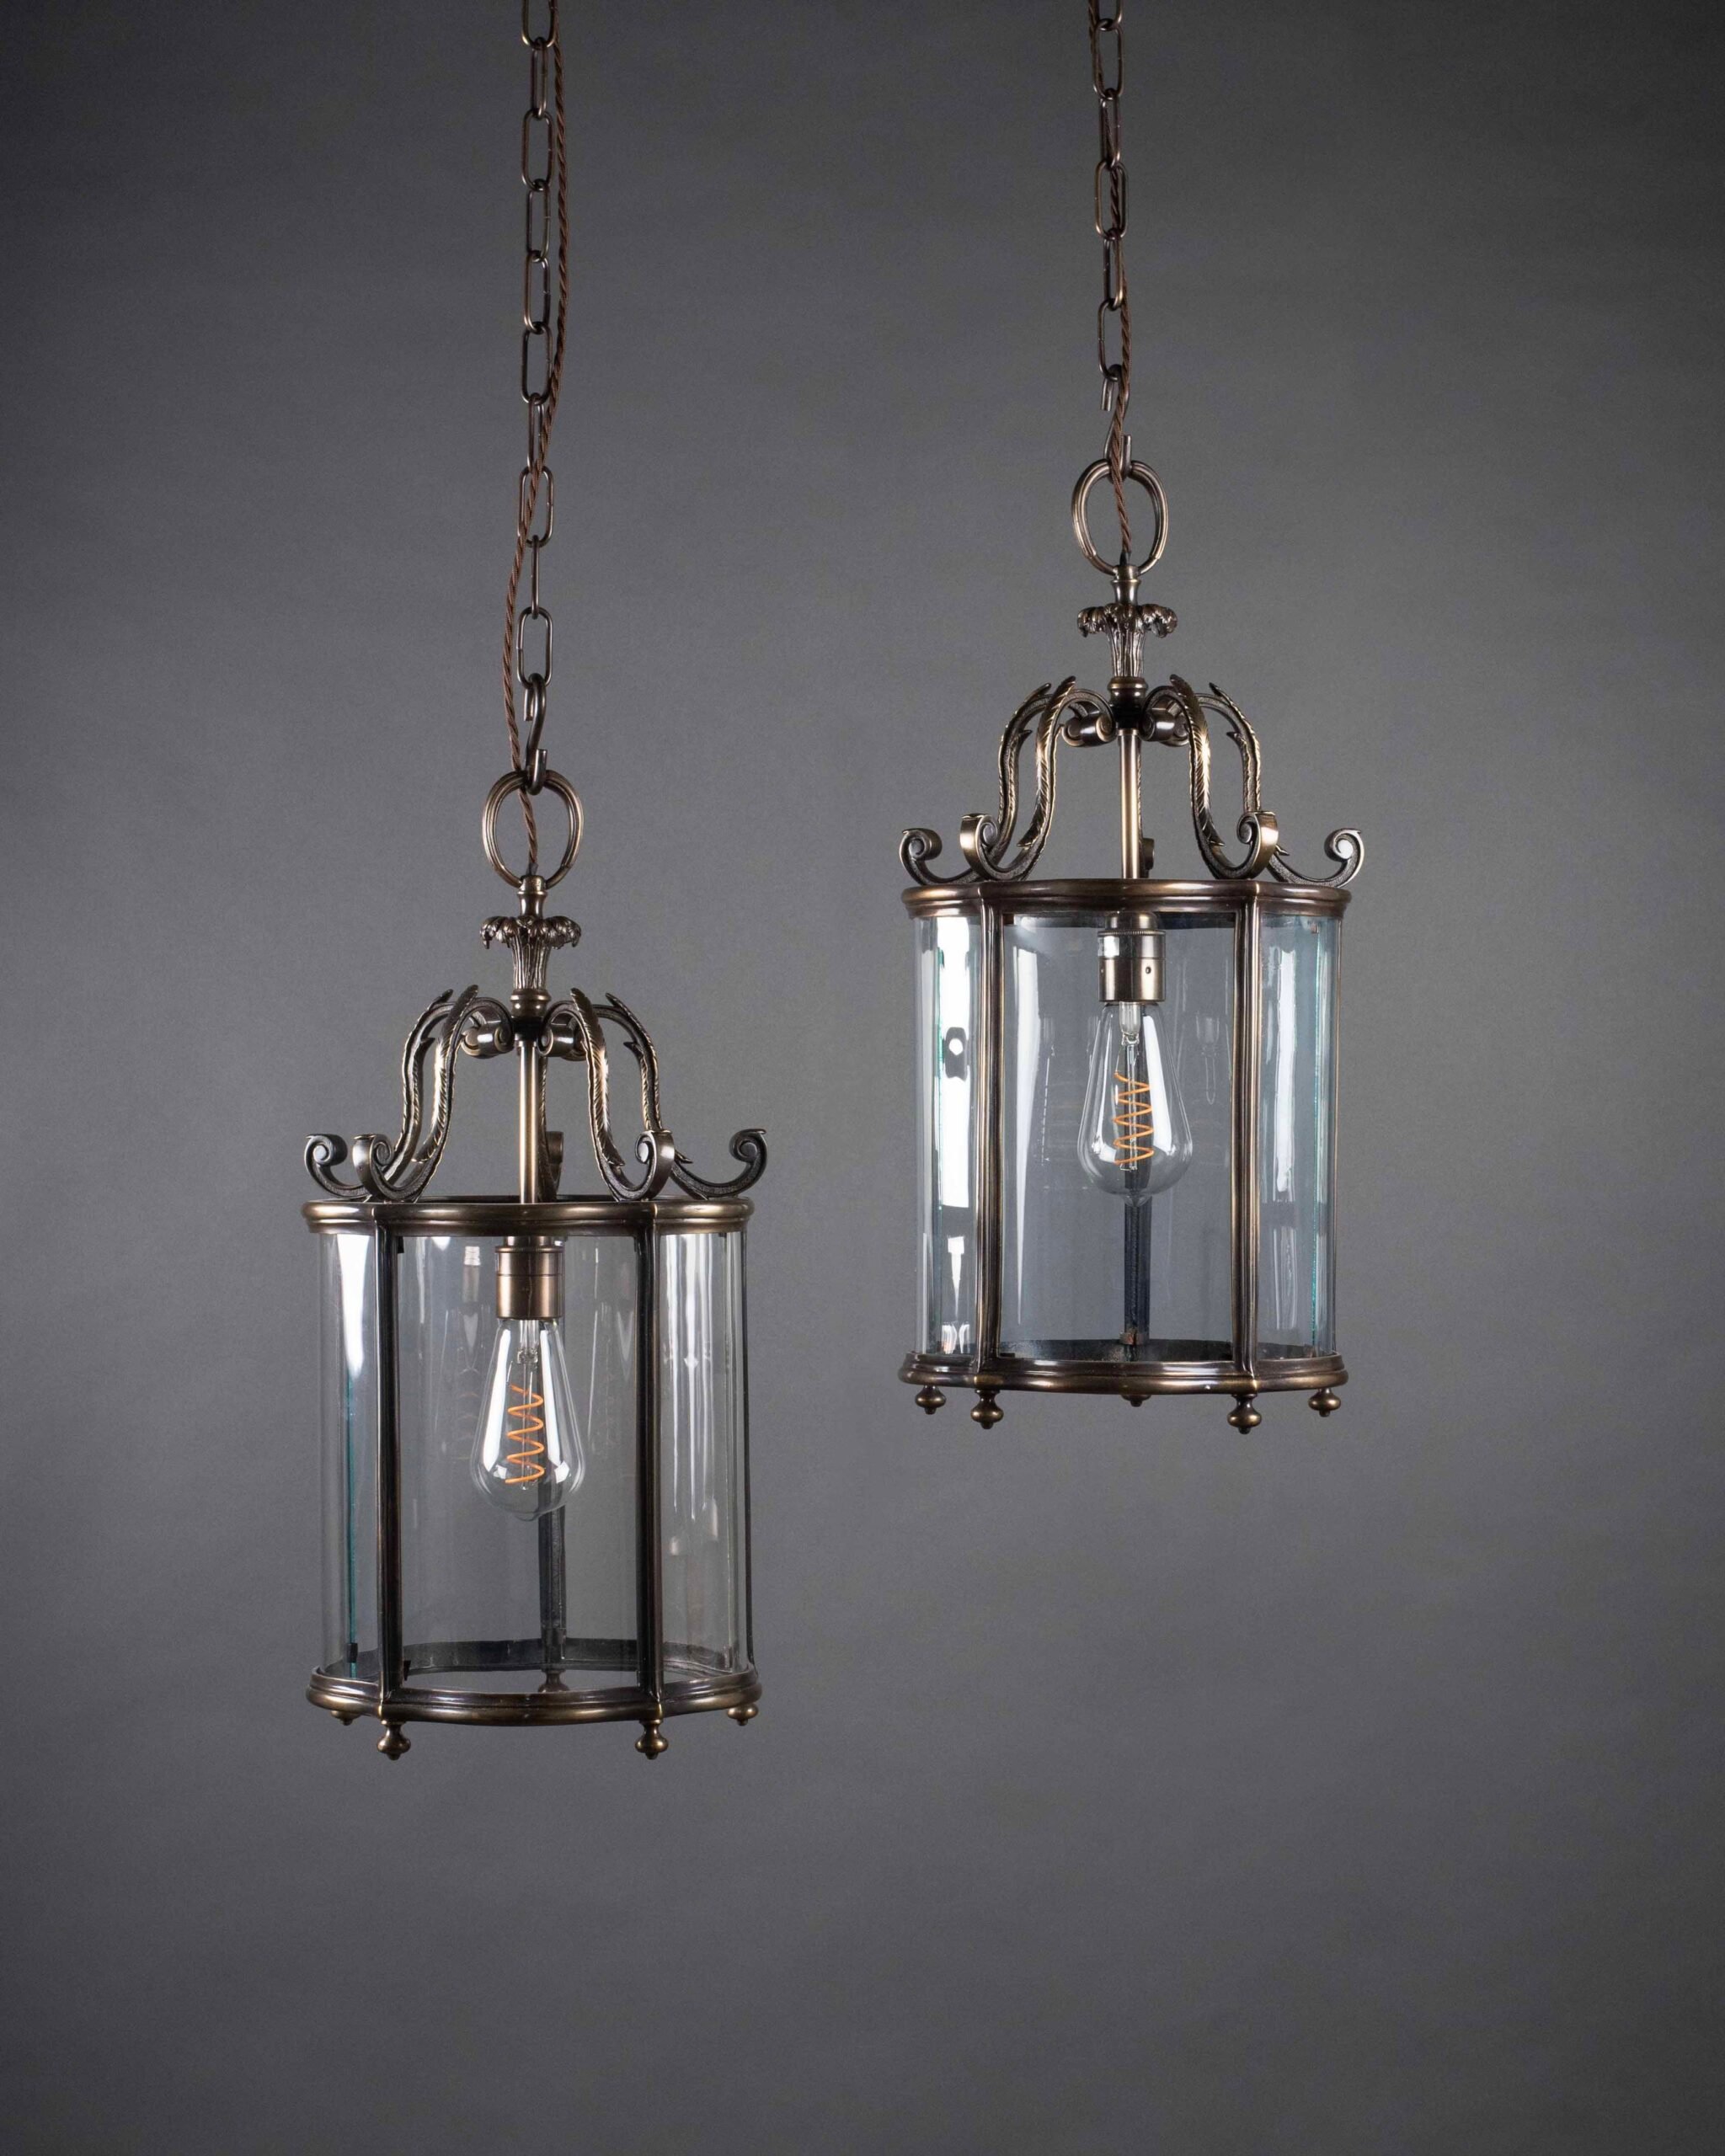 A fine pair of antique serpentine lanterns by Faraday & Son 7